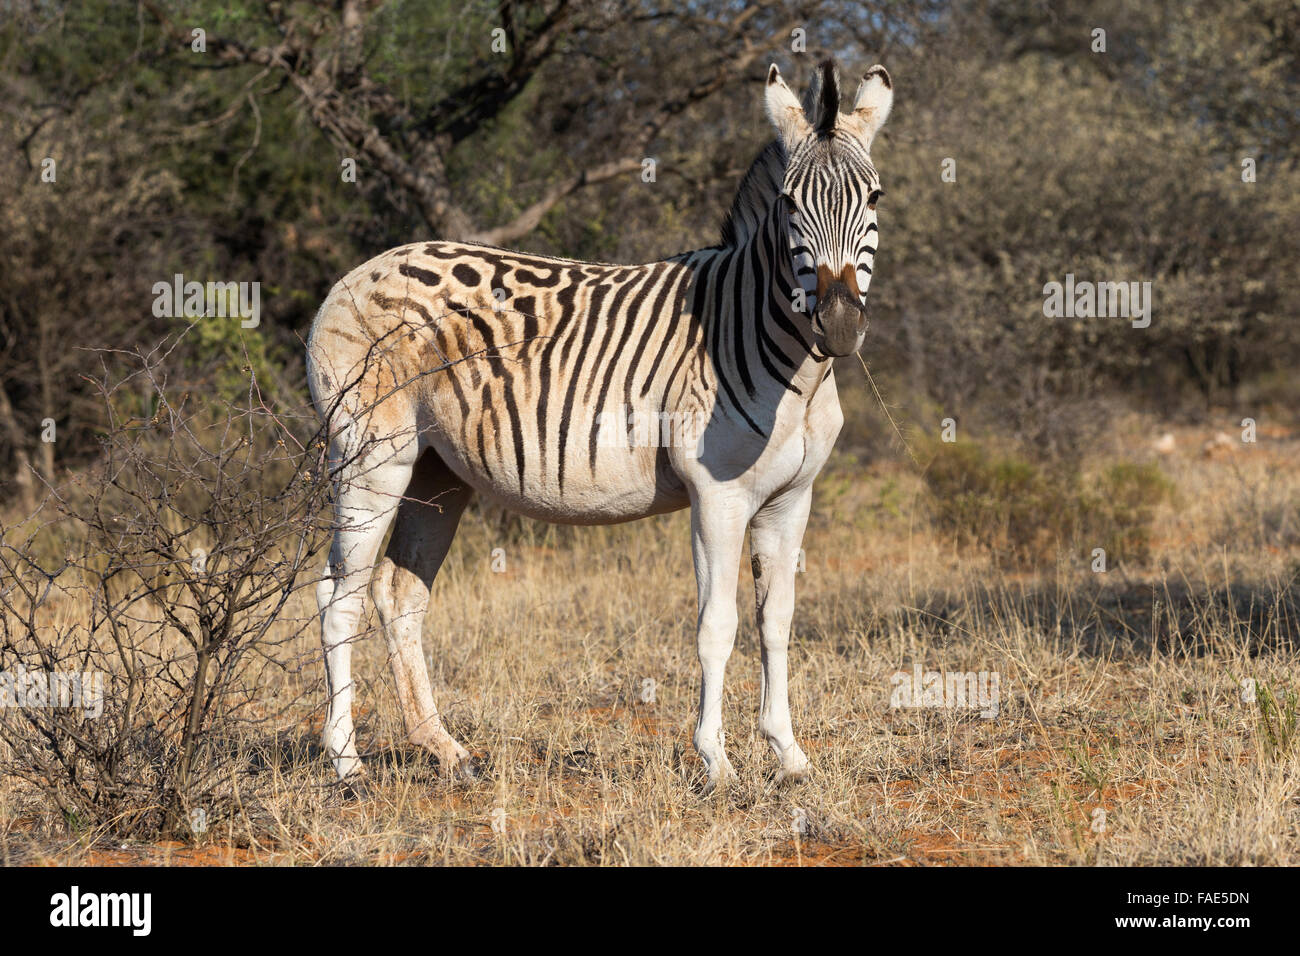 Pale-rumped zebra (Equus quagga) with quagga-like characteristics, Mokala National Park, South Africa Stock Photo